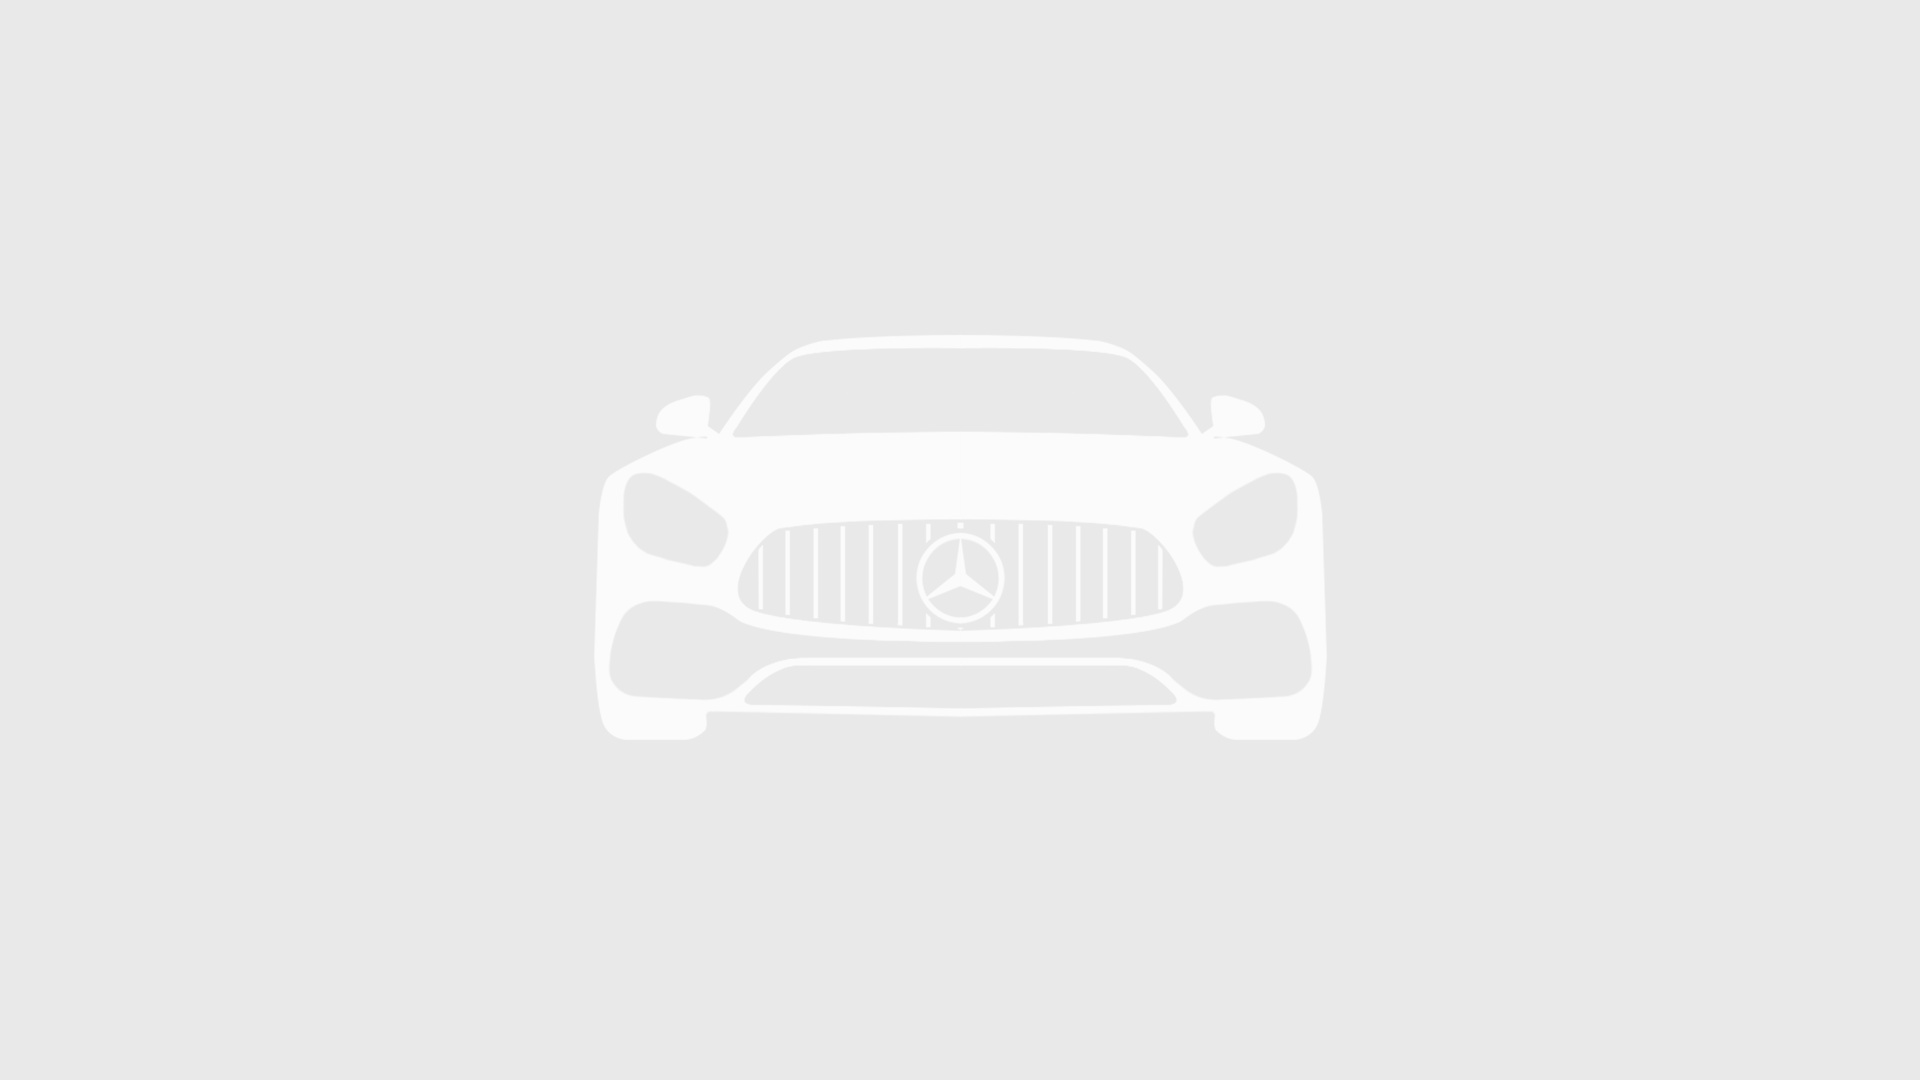 Mercedes-Benz комплектация EXCLUSIVE / L 250 d двигатель 2.1 литра (190 л.с.) Серый